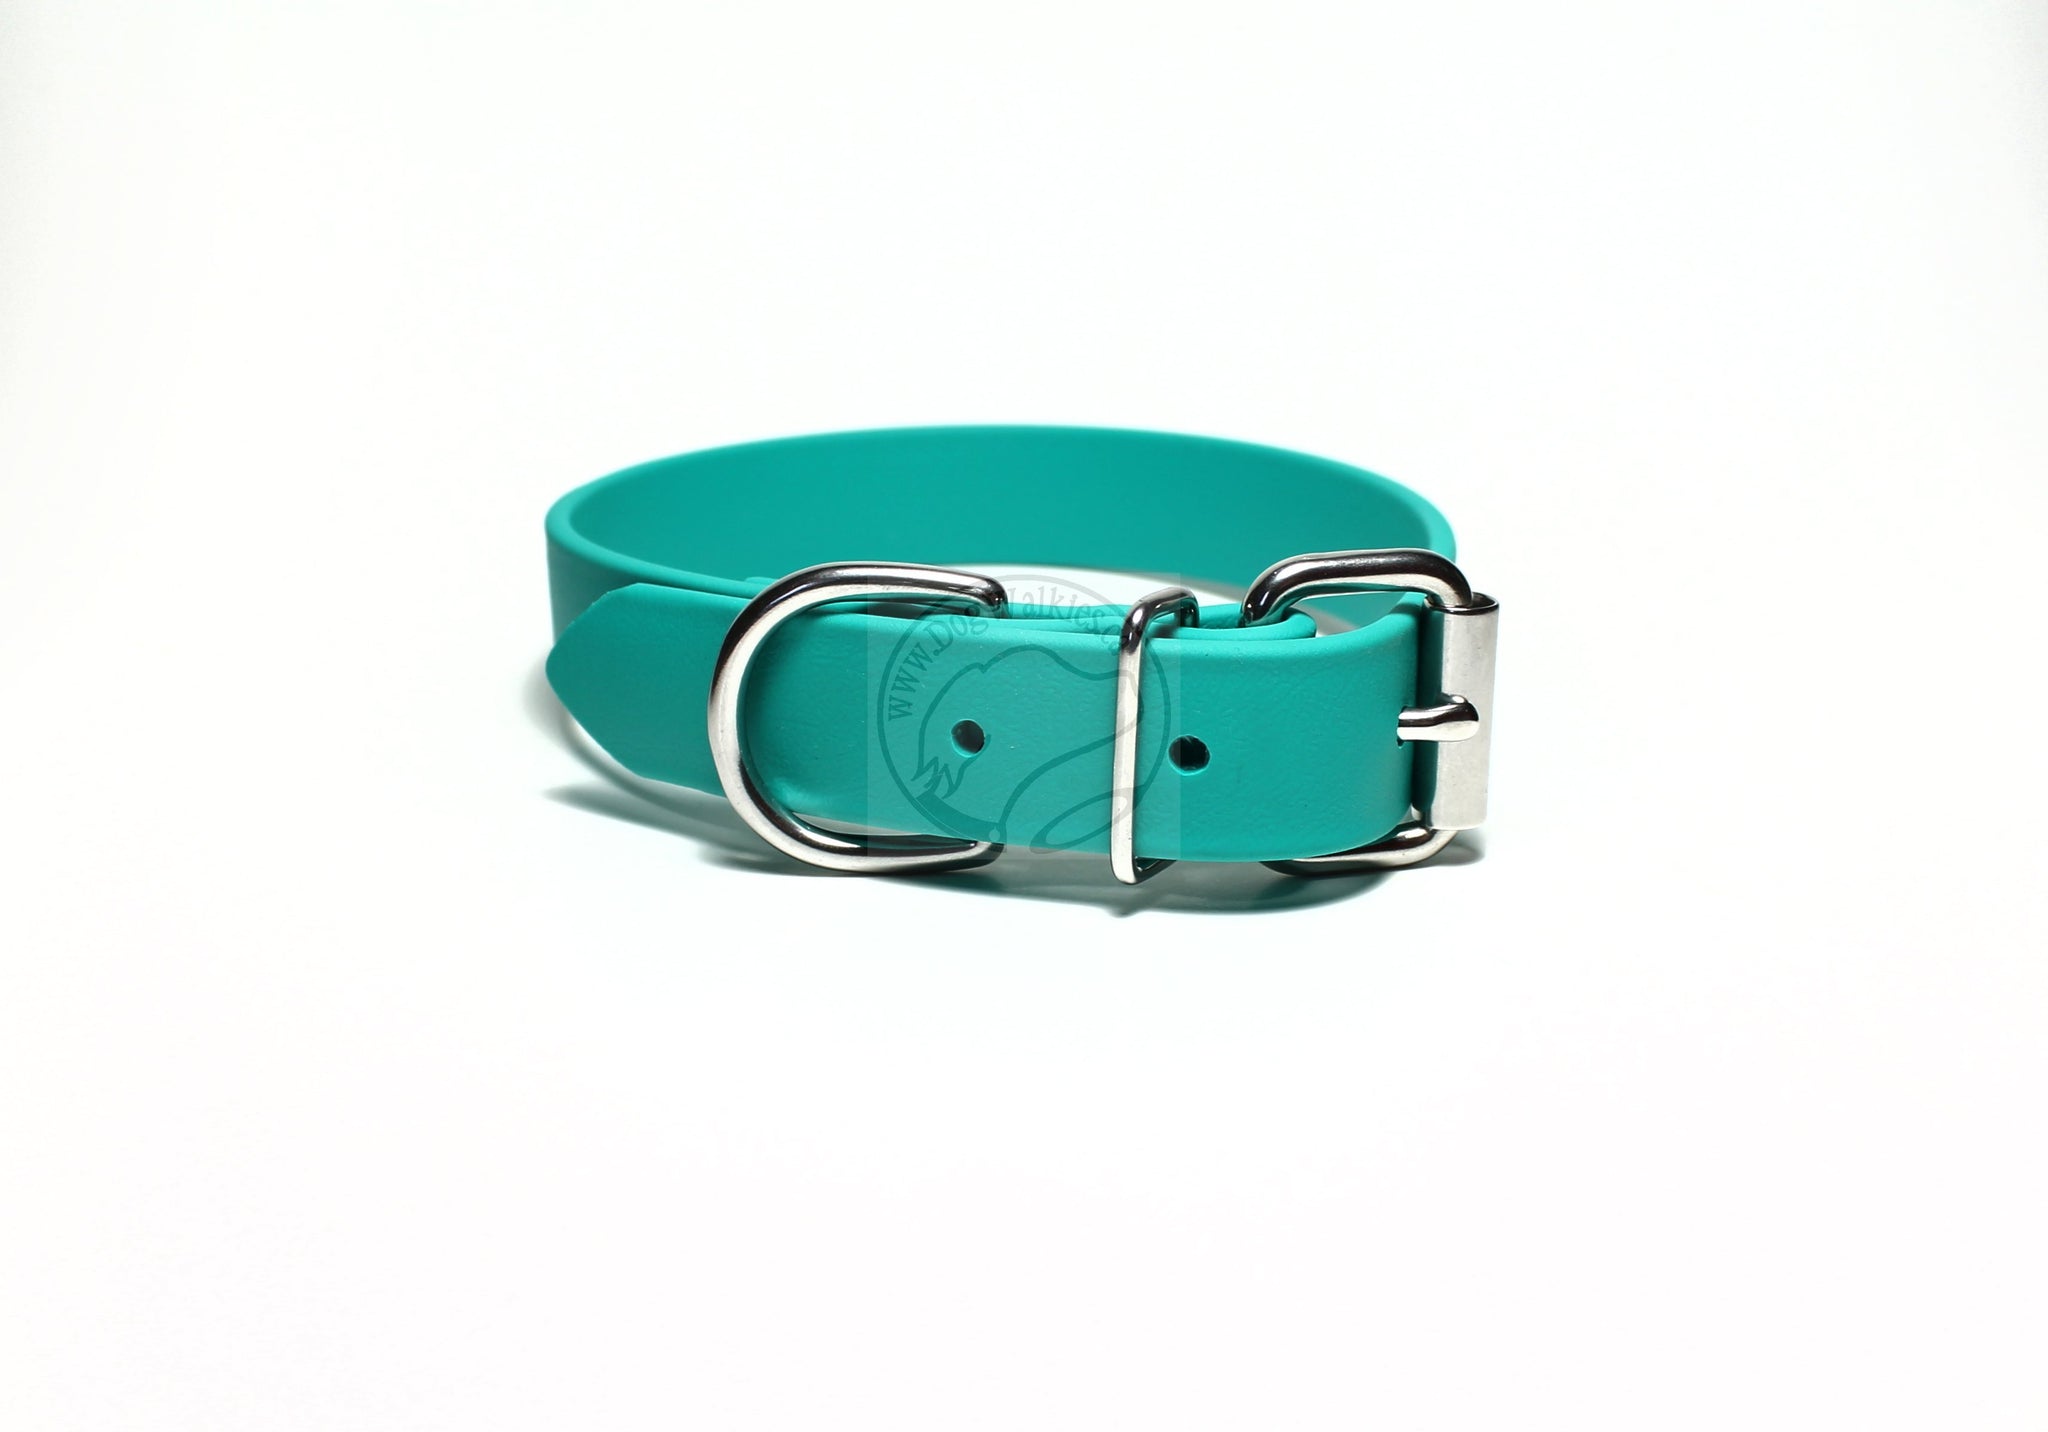 Teal Biothane Dog Collar - 1 inch (25mm) wide